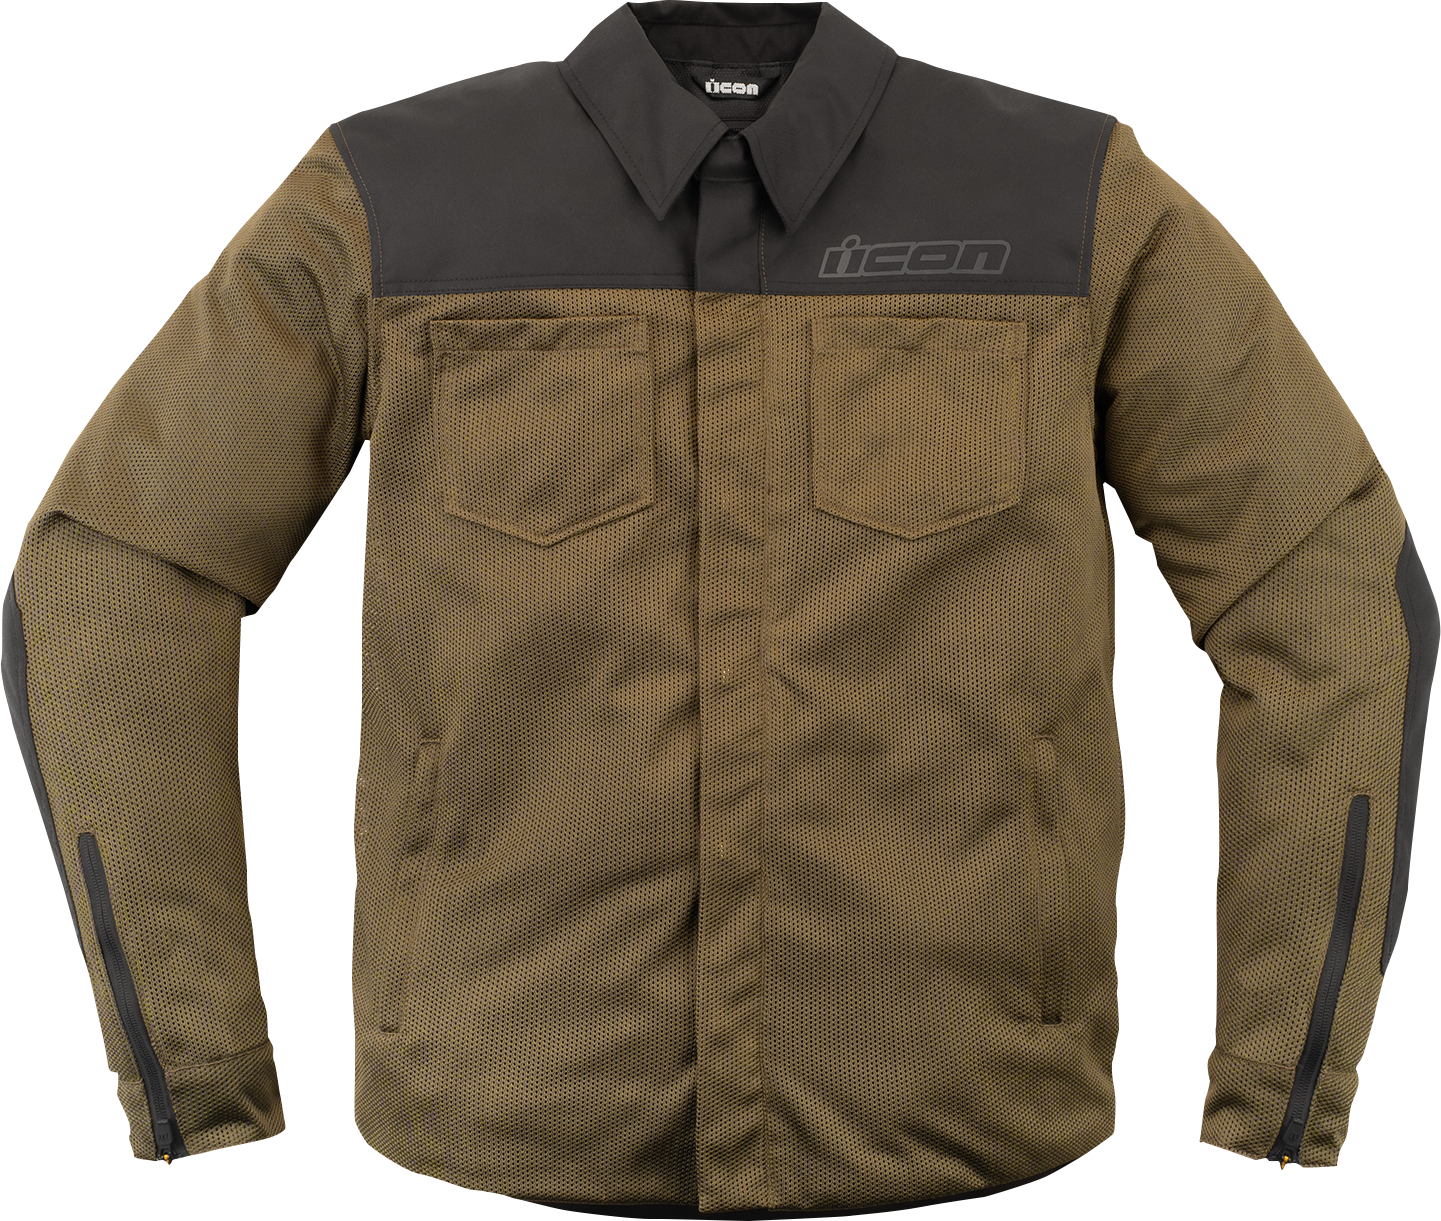 ICON Upstate Mesh CE Jacket - Green - Medium 2820-6230